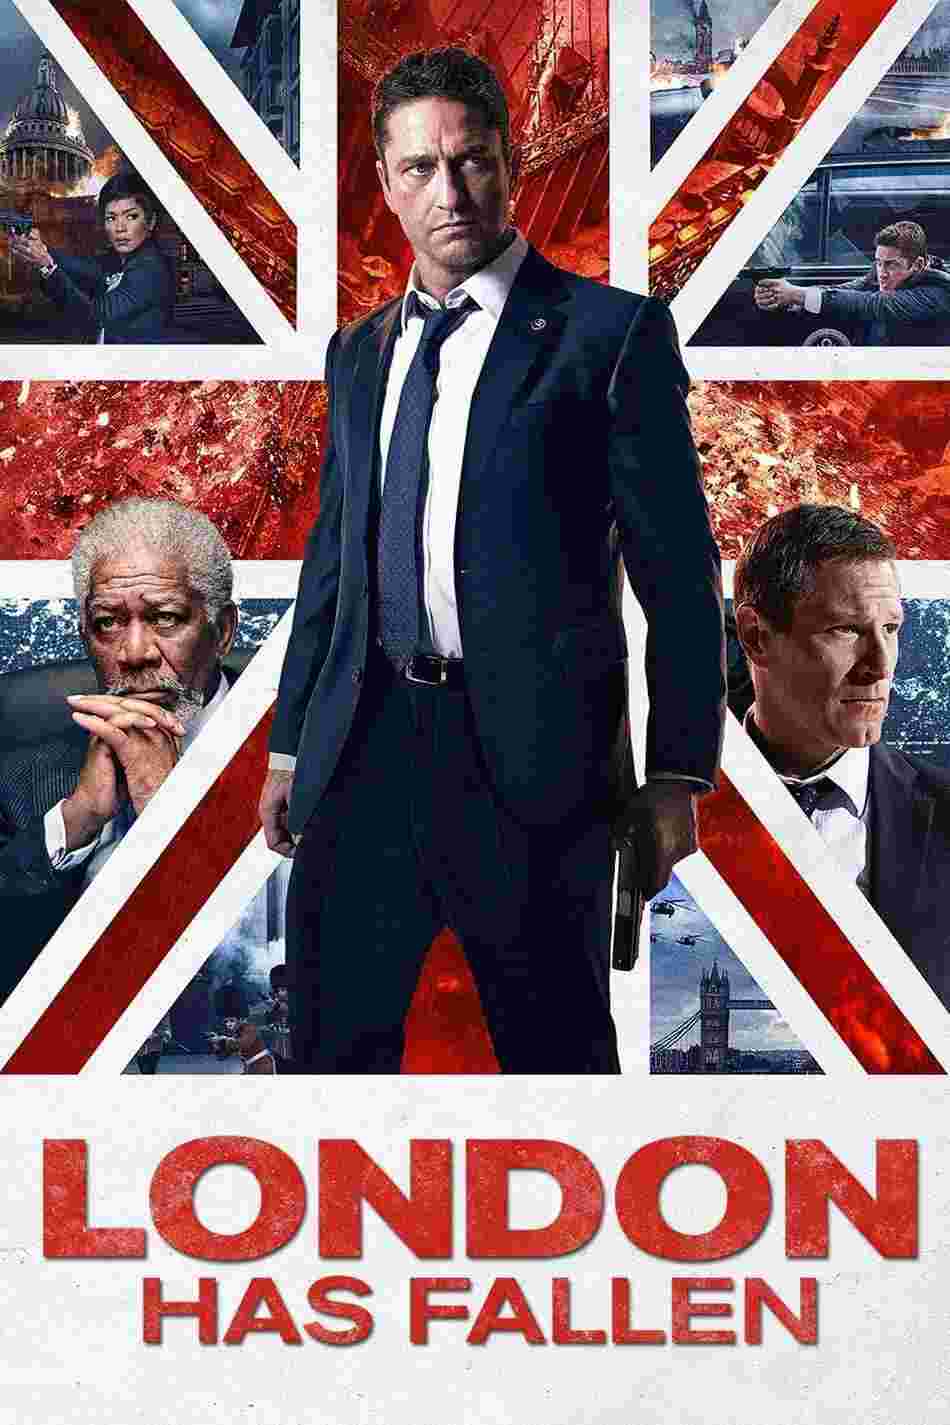 London Has Fallen (2016) Gerard Butler